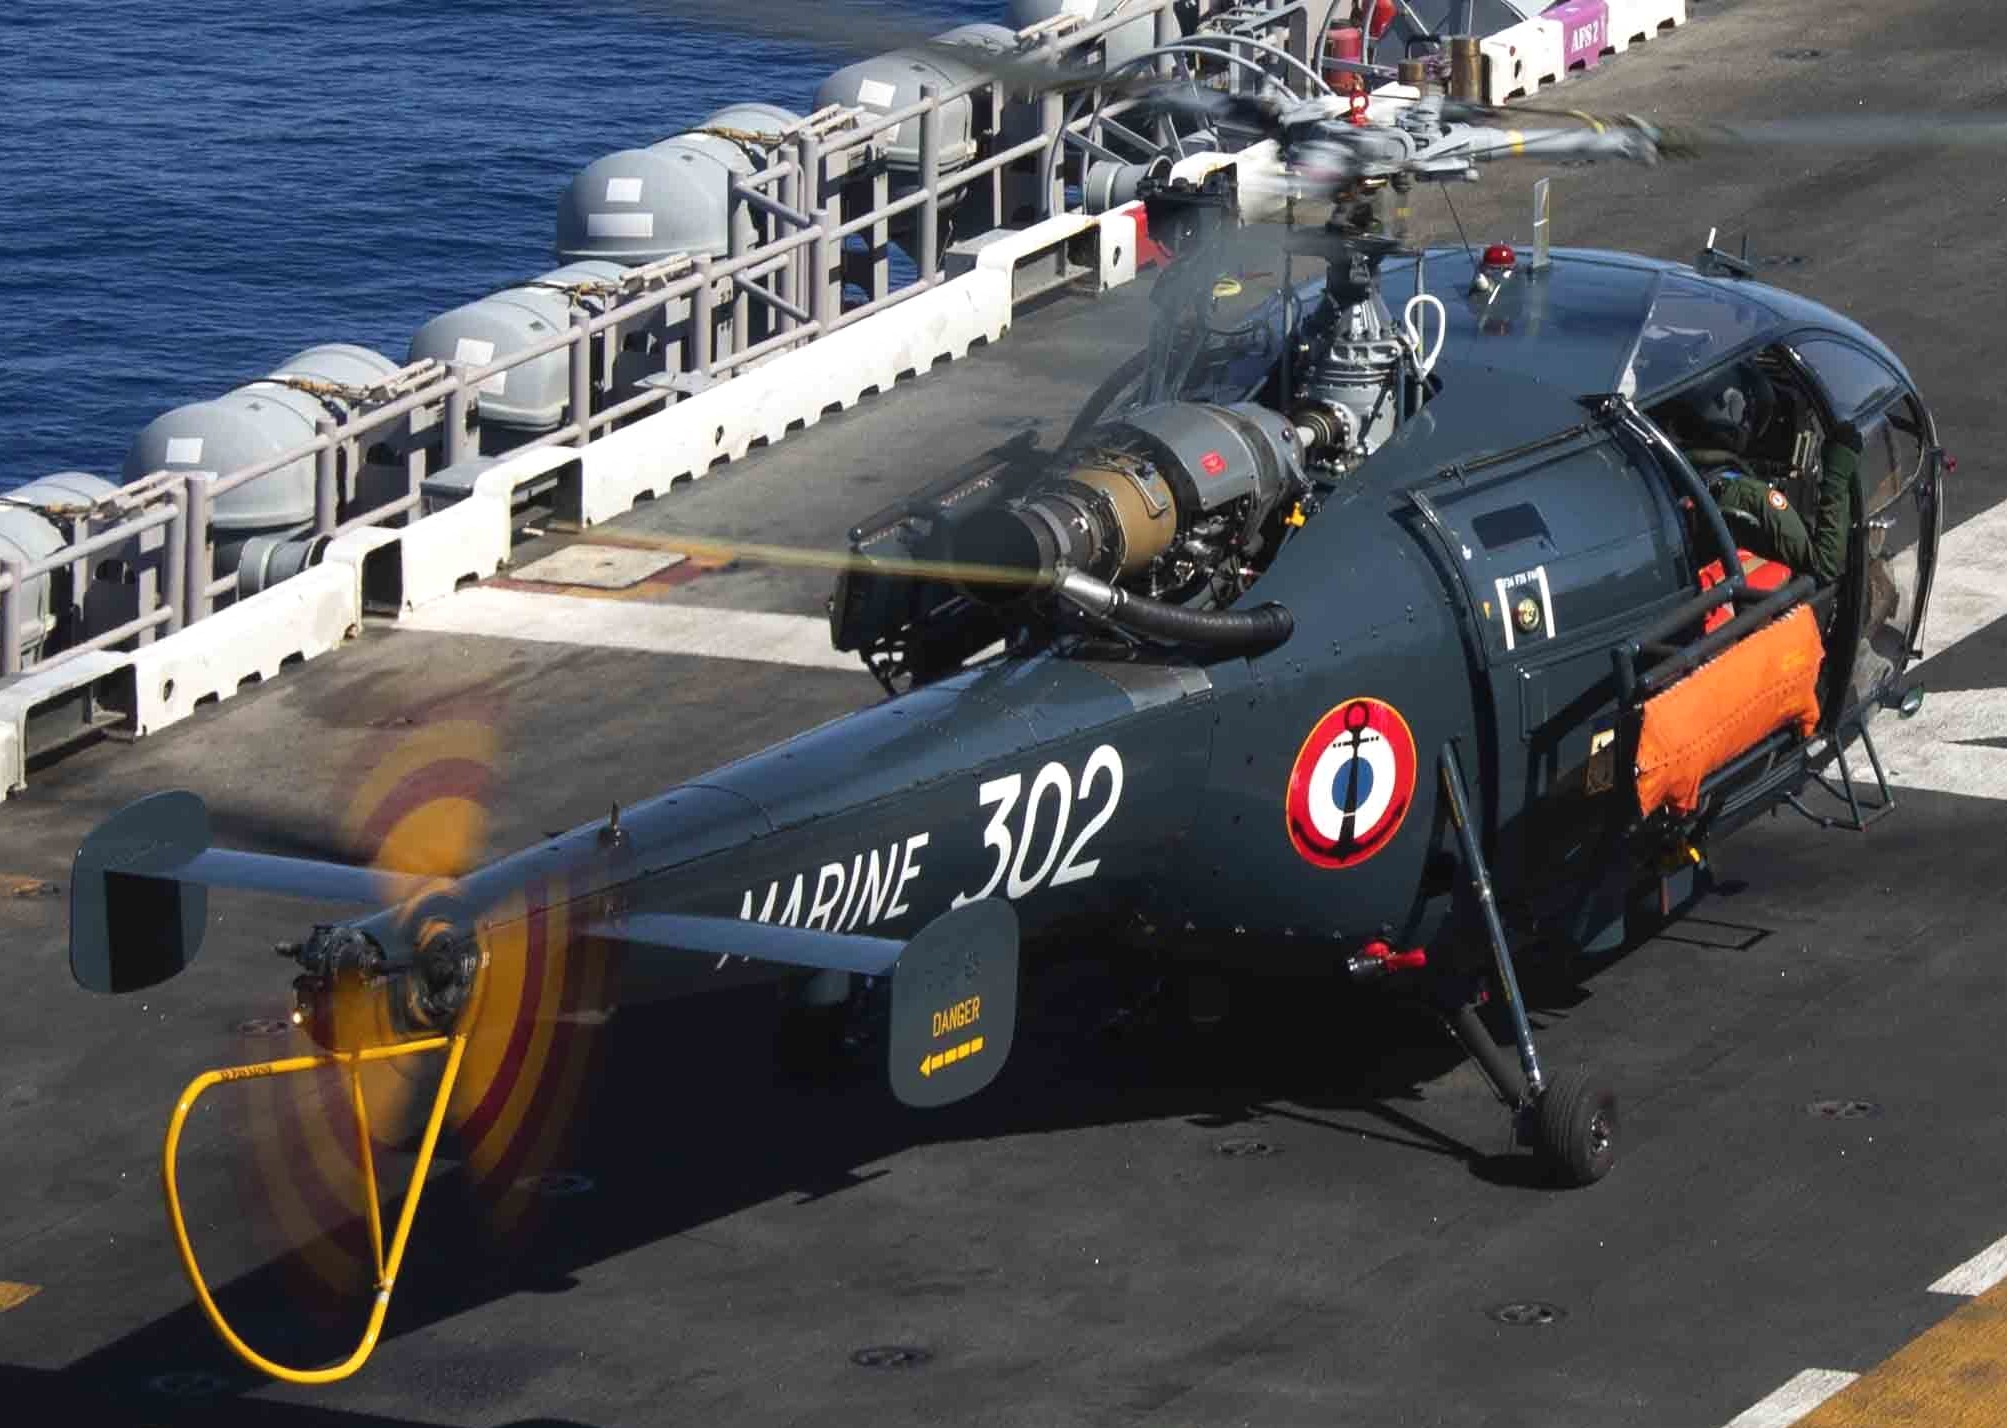 sa 316 319 alouette iii helicopter french navy marine nationale aeronavale flottille 302 25